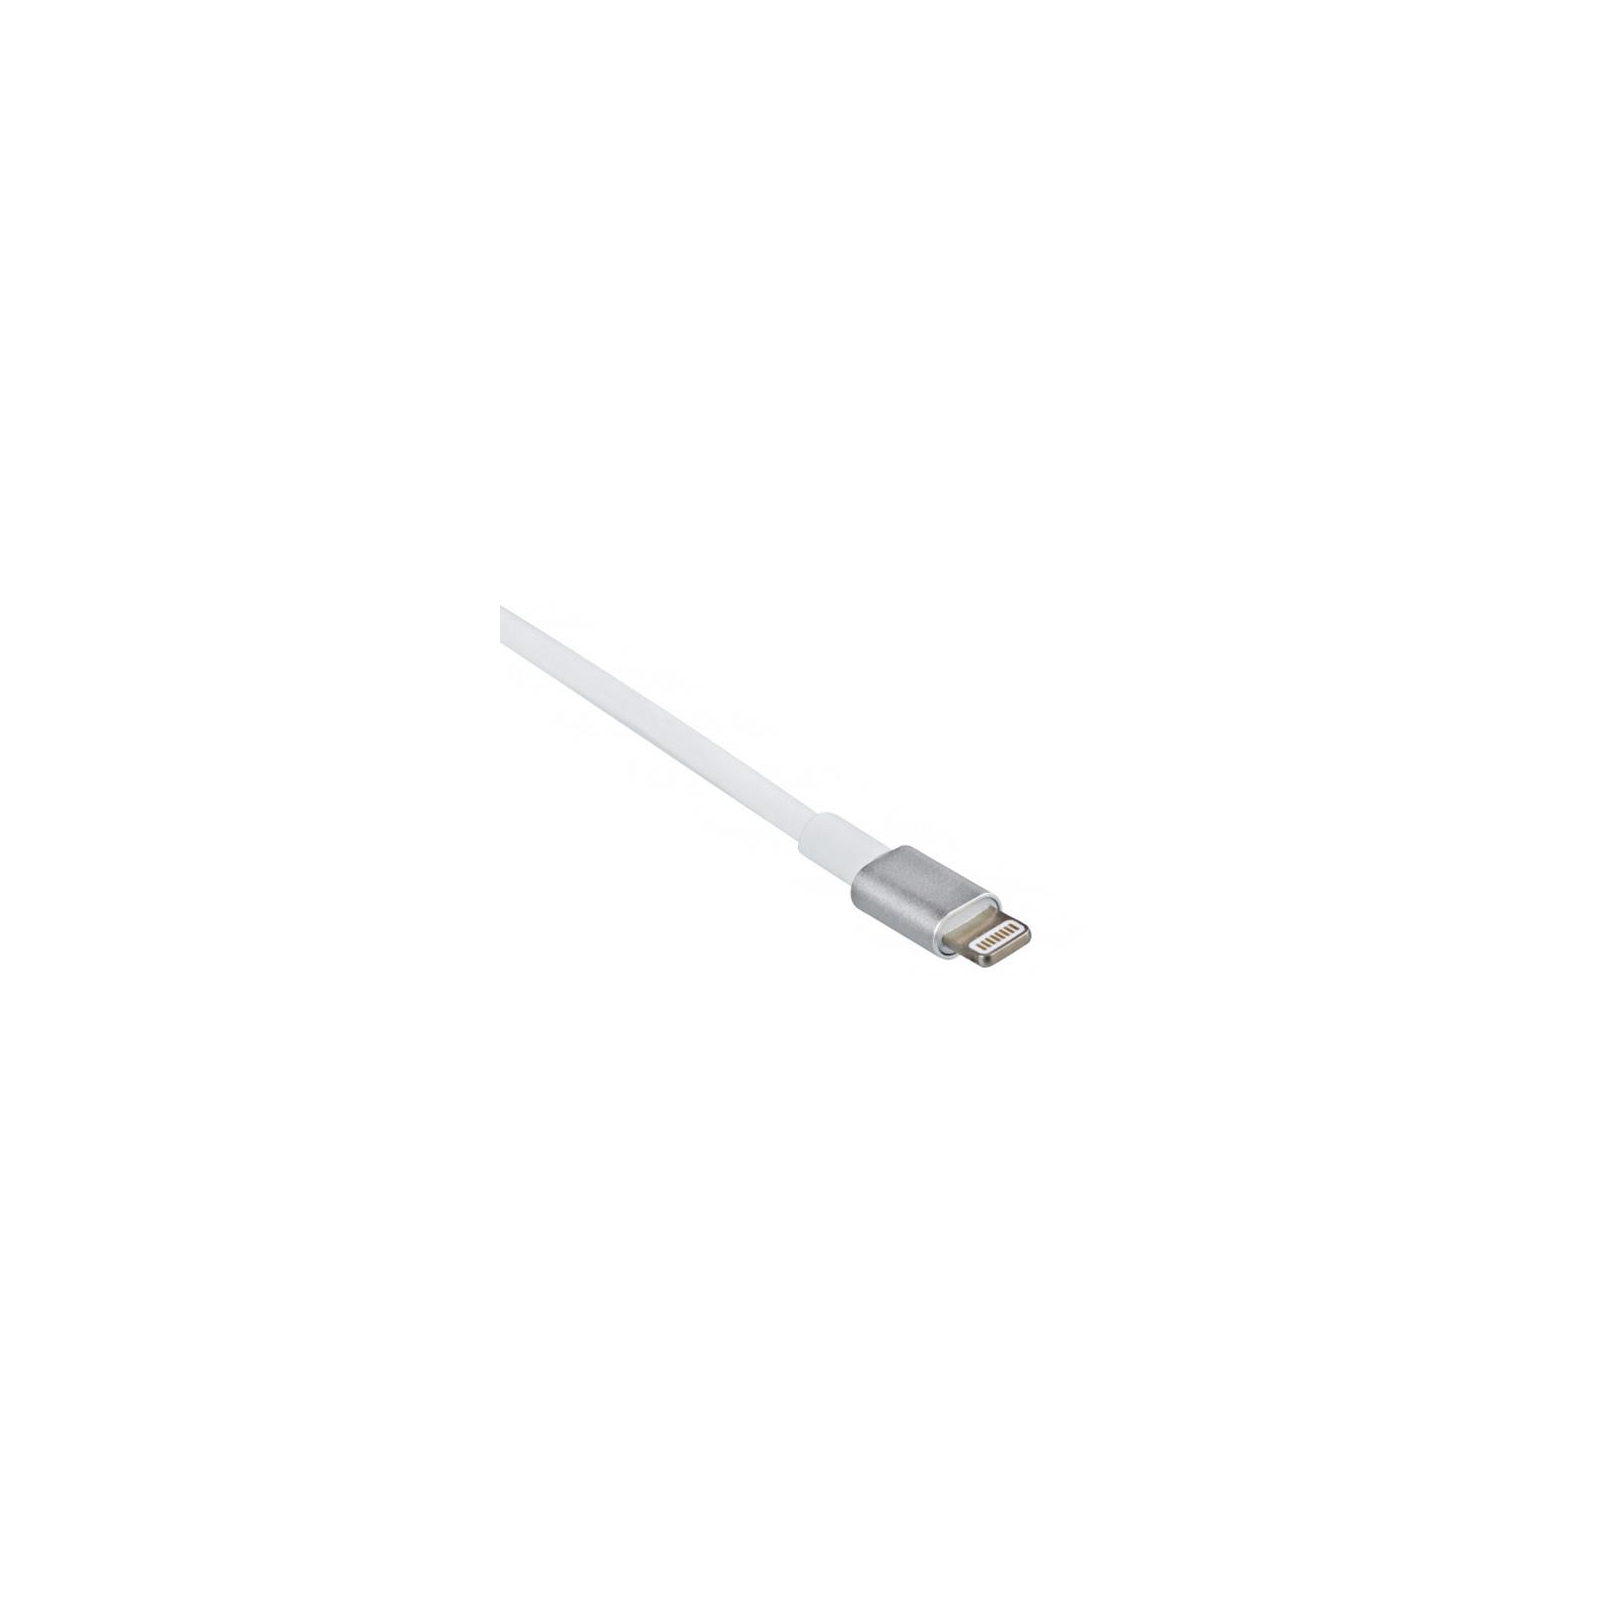 Переходник 2E Lightning to HDMI with USB A Male Cable, Alumium Shell,2 m (2EW-2327) изображение 3